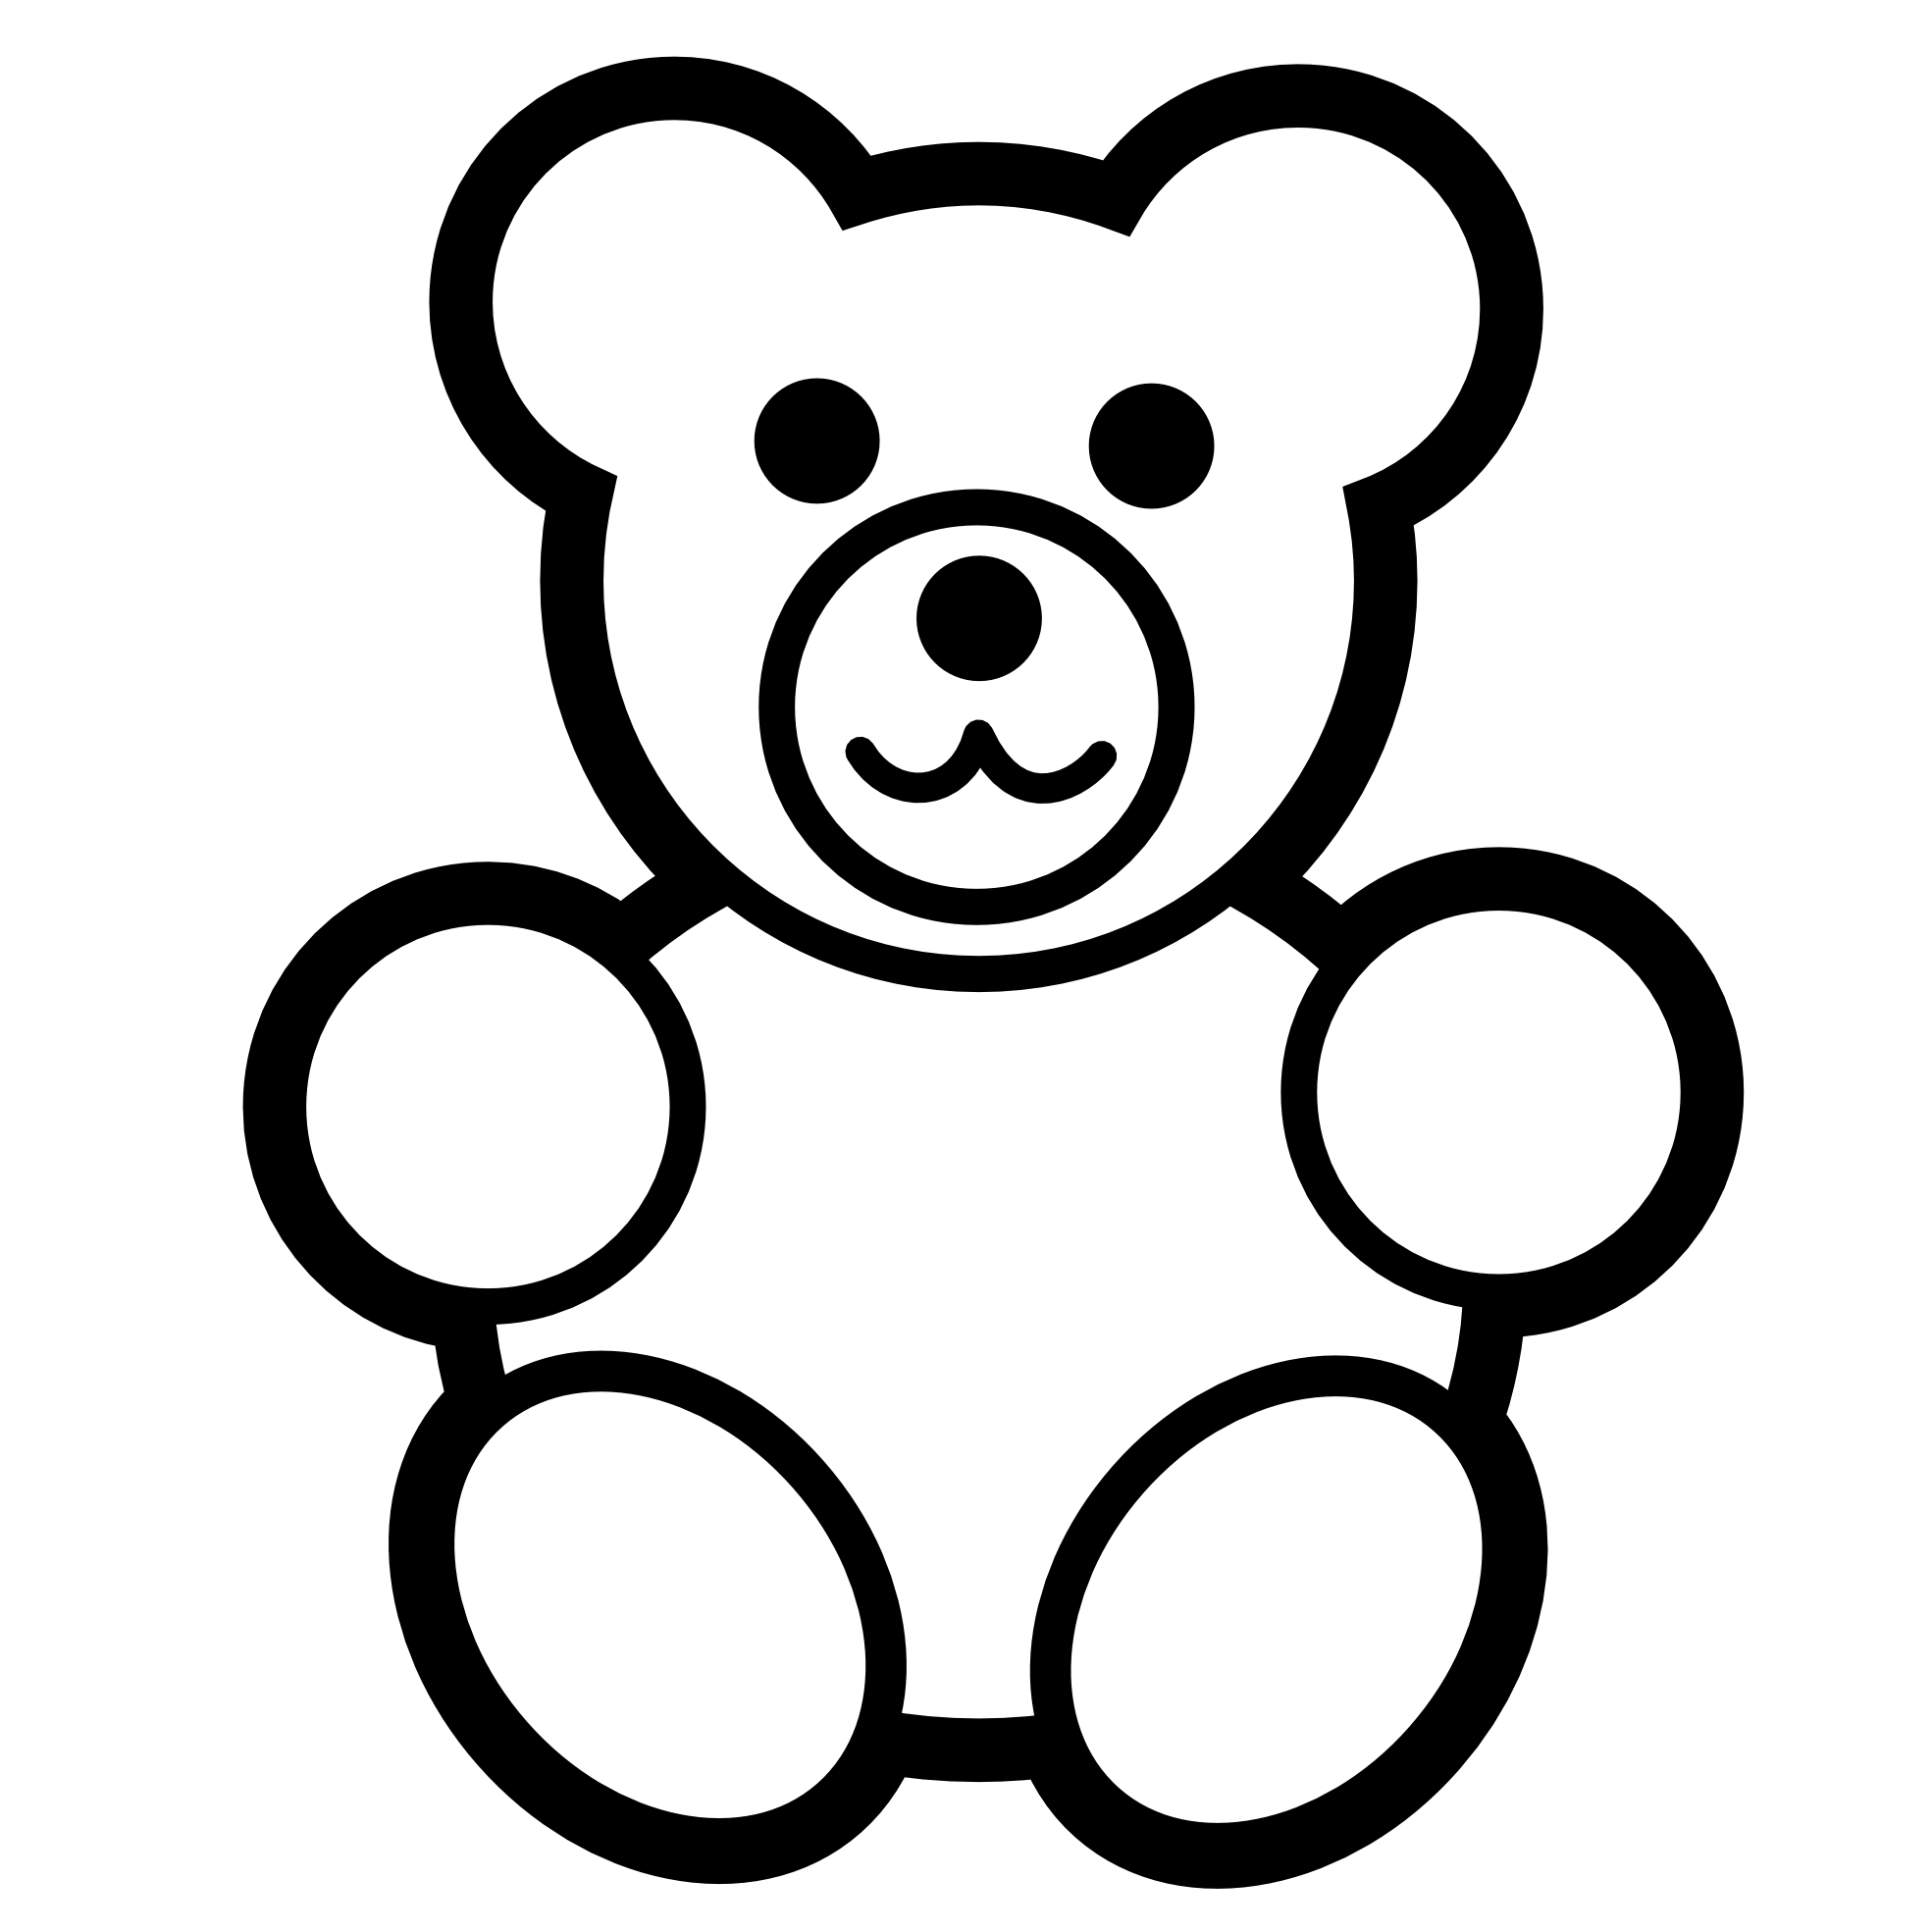 Pix For > Teddy Bear Cartoon Black And White